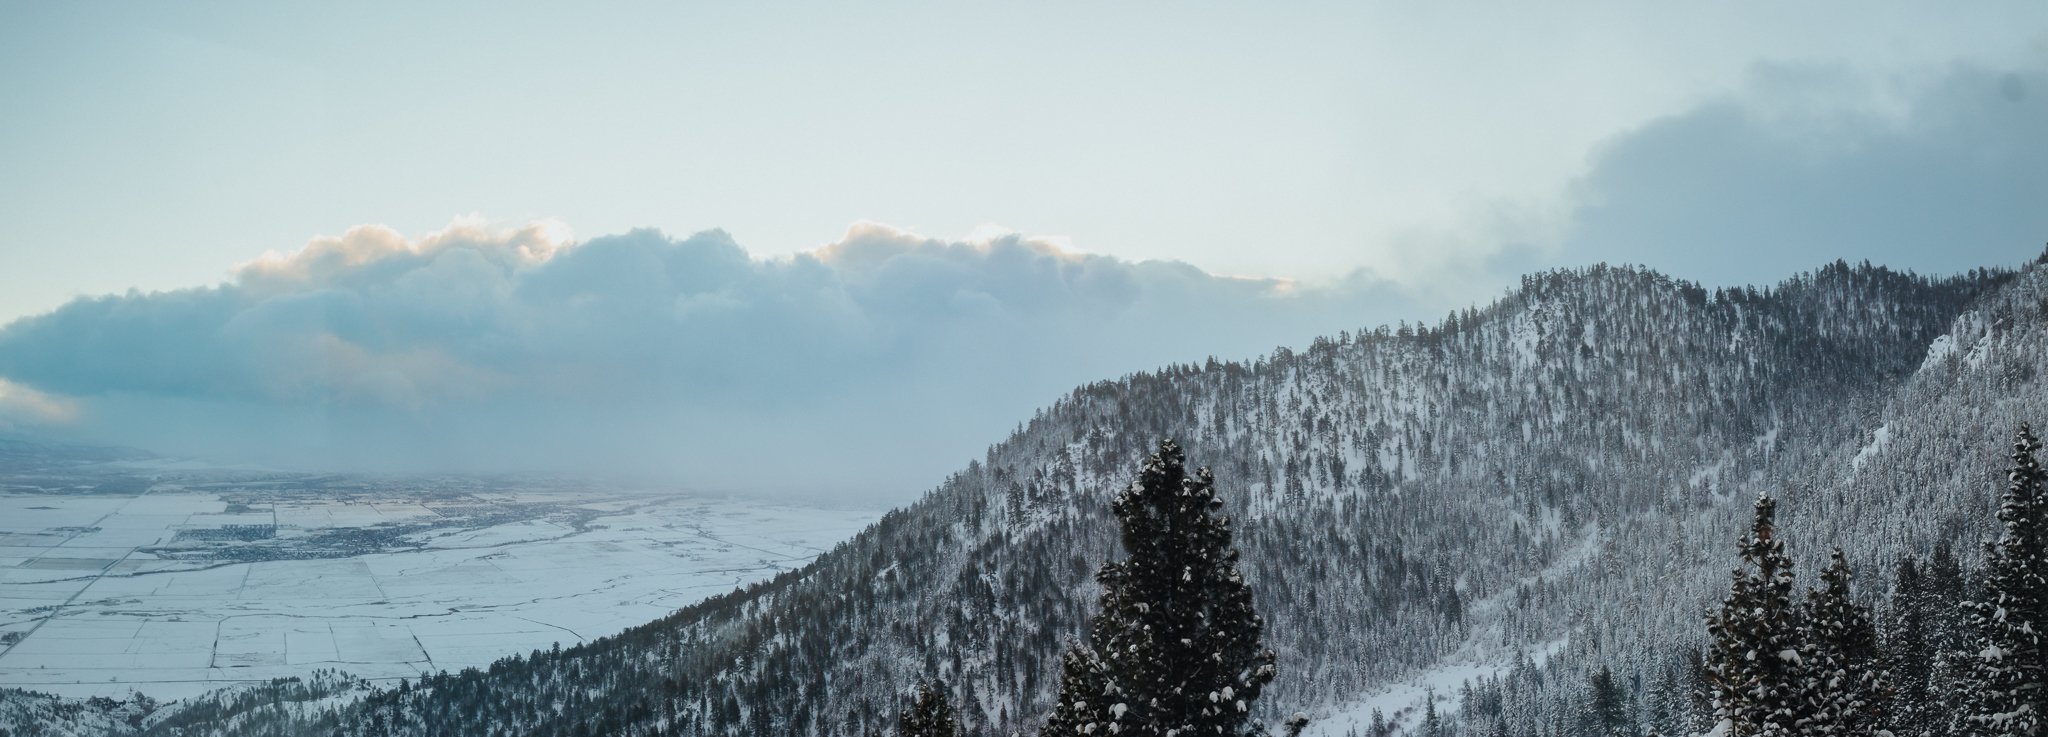 Winter at Lake Tahoe Photograph by Lenka Vodicka of Lenkaland Photography